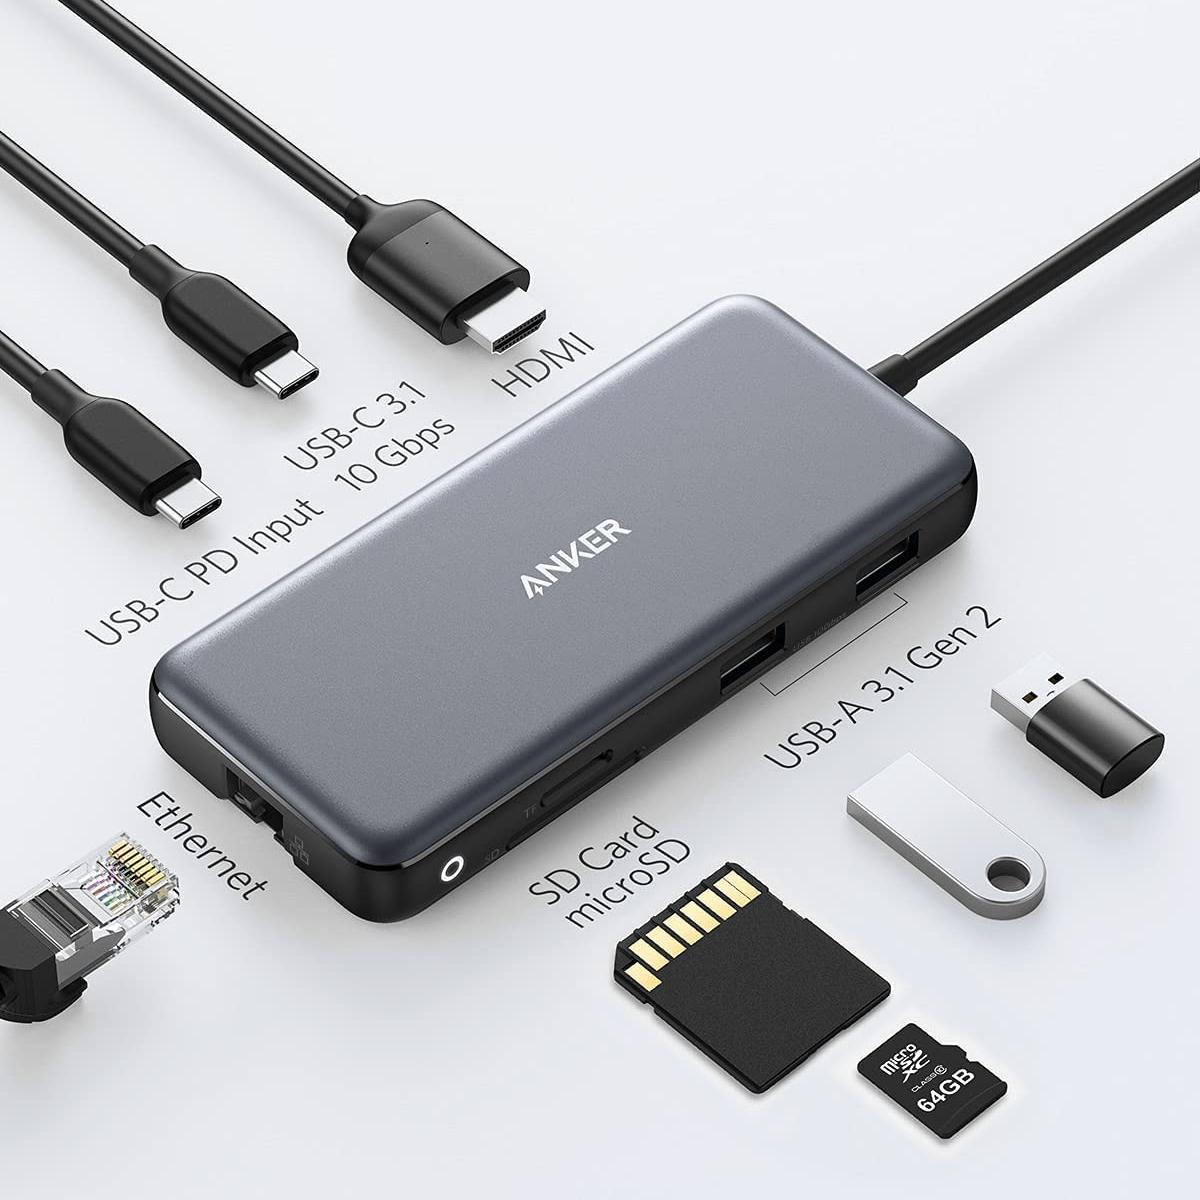 Anker 555 PowerExpand 8-in-1 USB-C Hub - Best overall USB-C hub